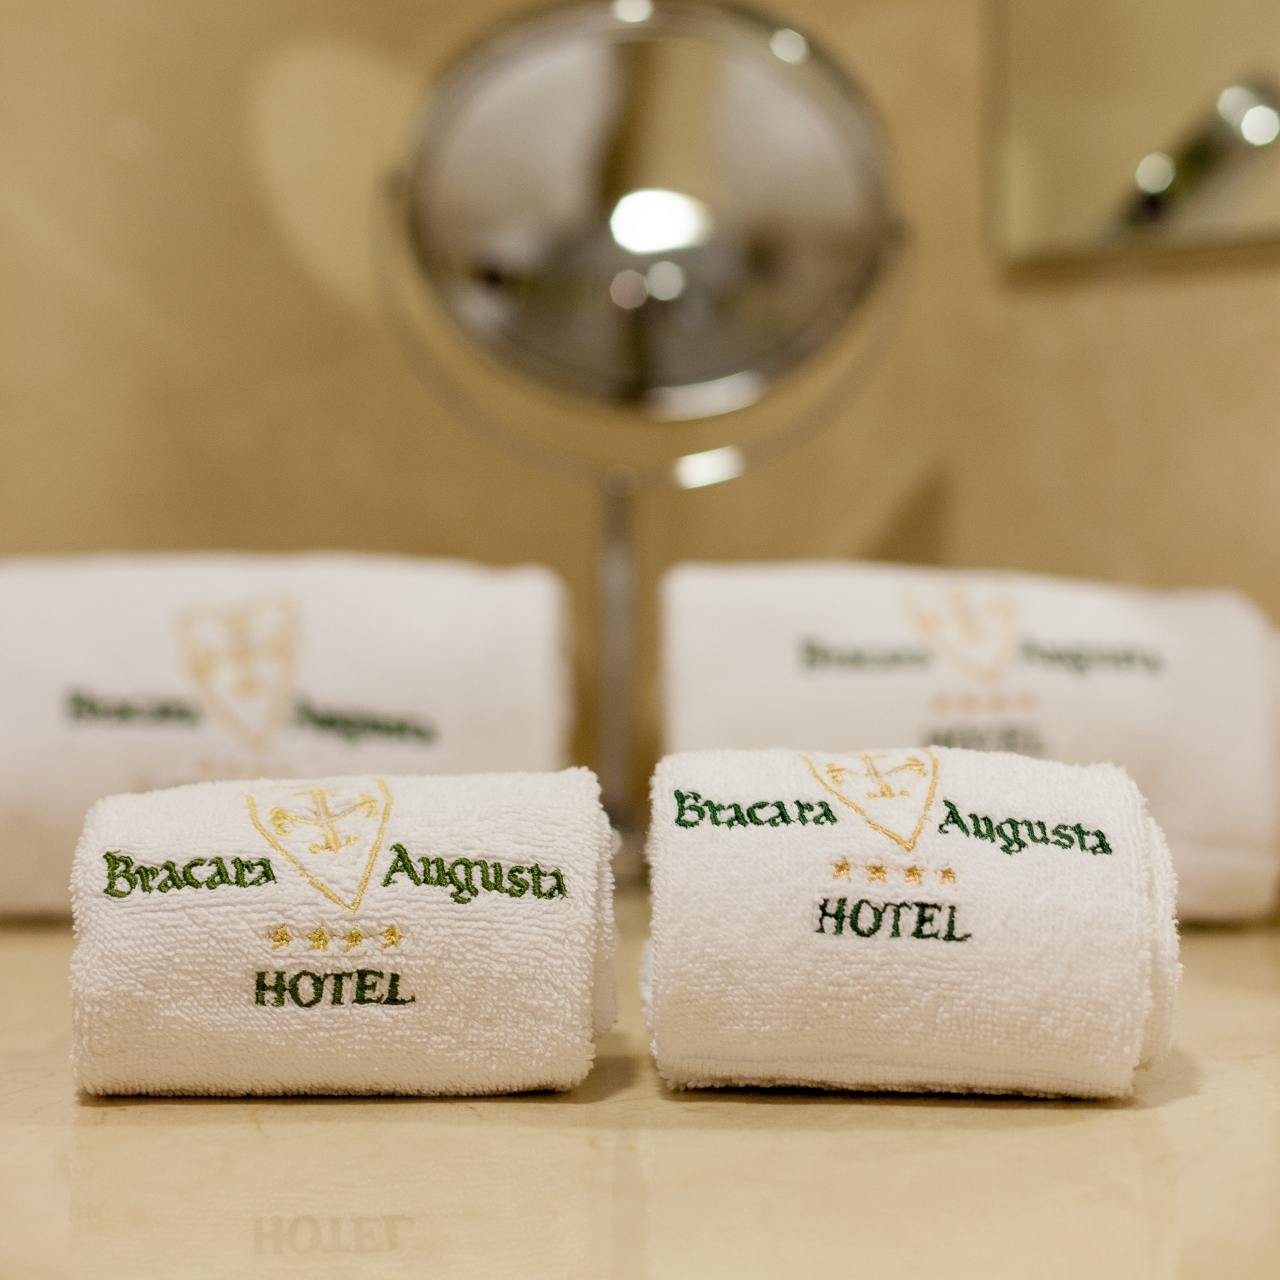 Bracara Augusta Hotel en Braga en HRS con servicios gratuitos